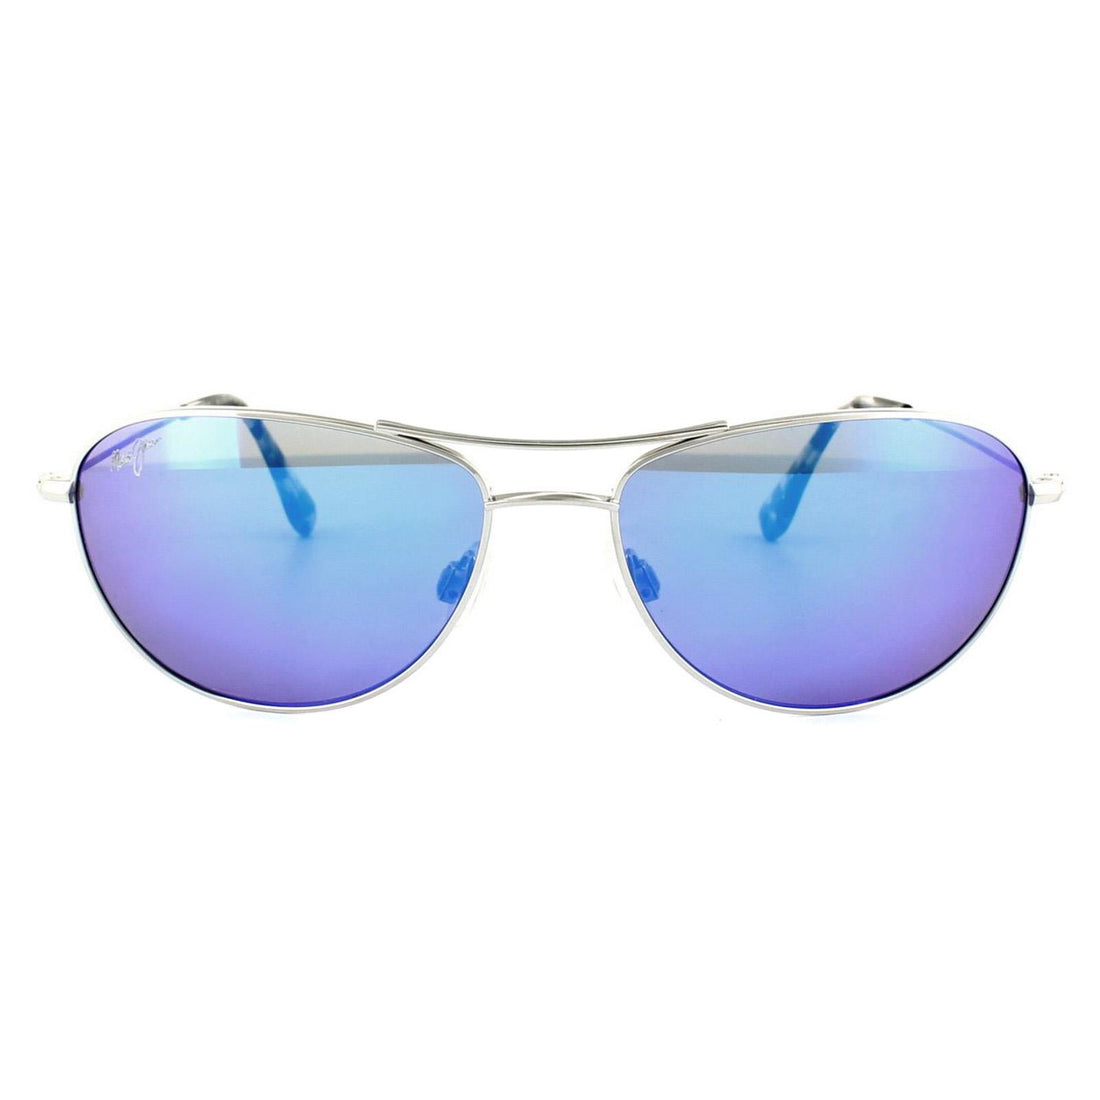 Maui Jim Sandbar Sunglasses for sale online | eBay